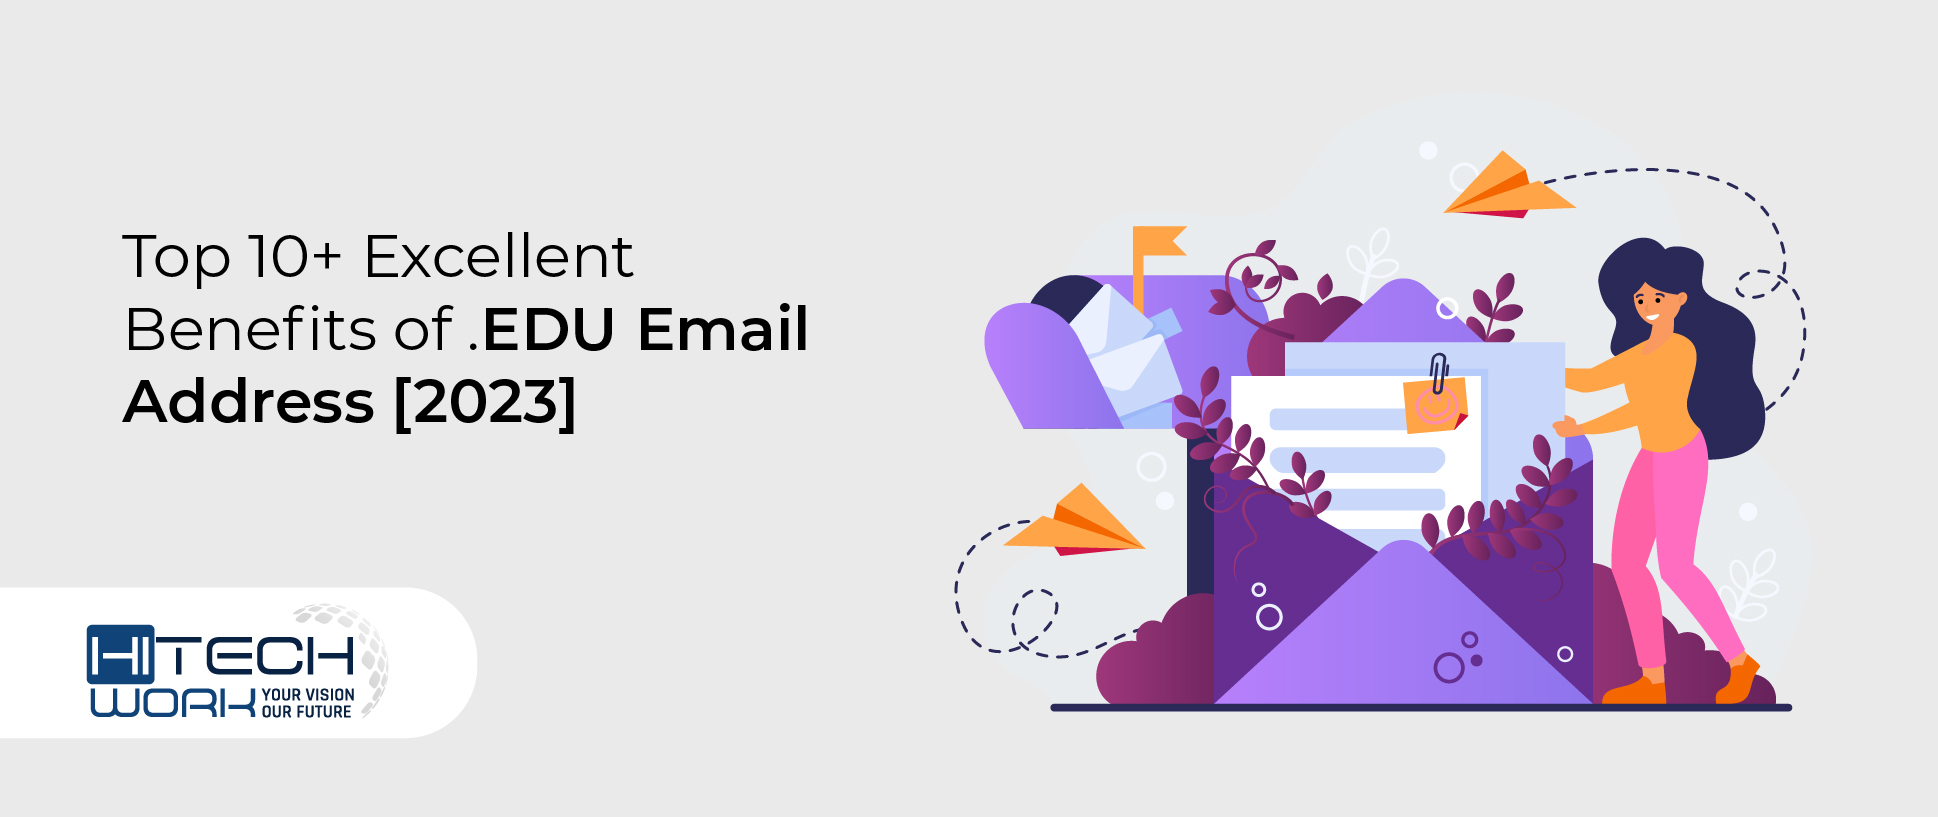 Benefits of .EDU Email Address